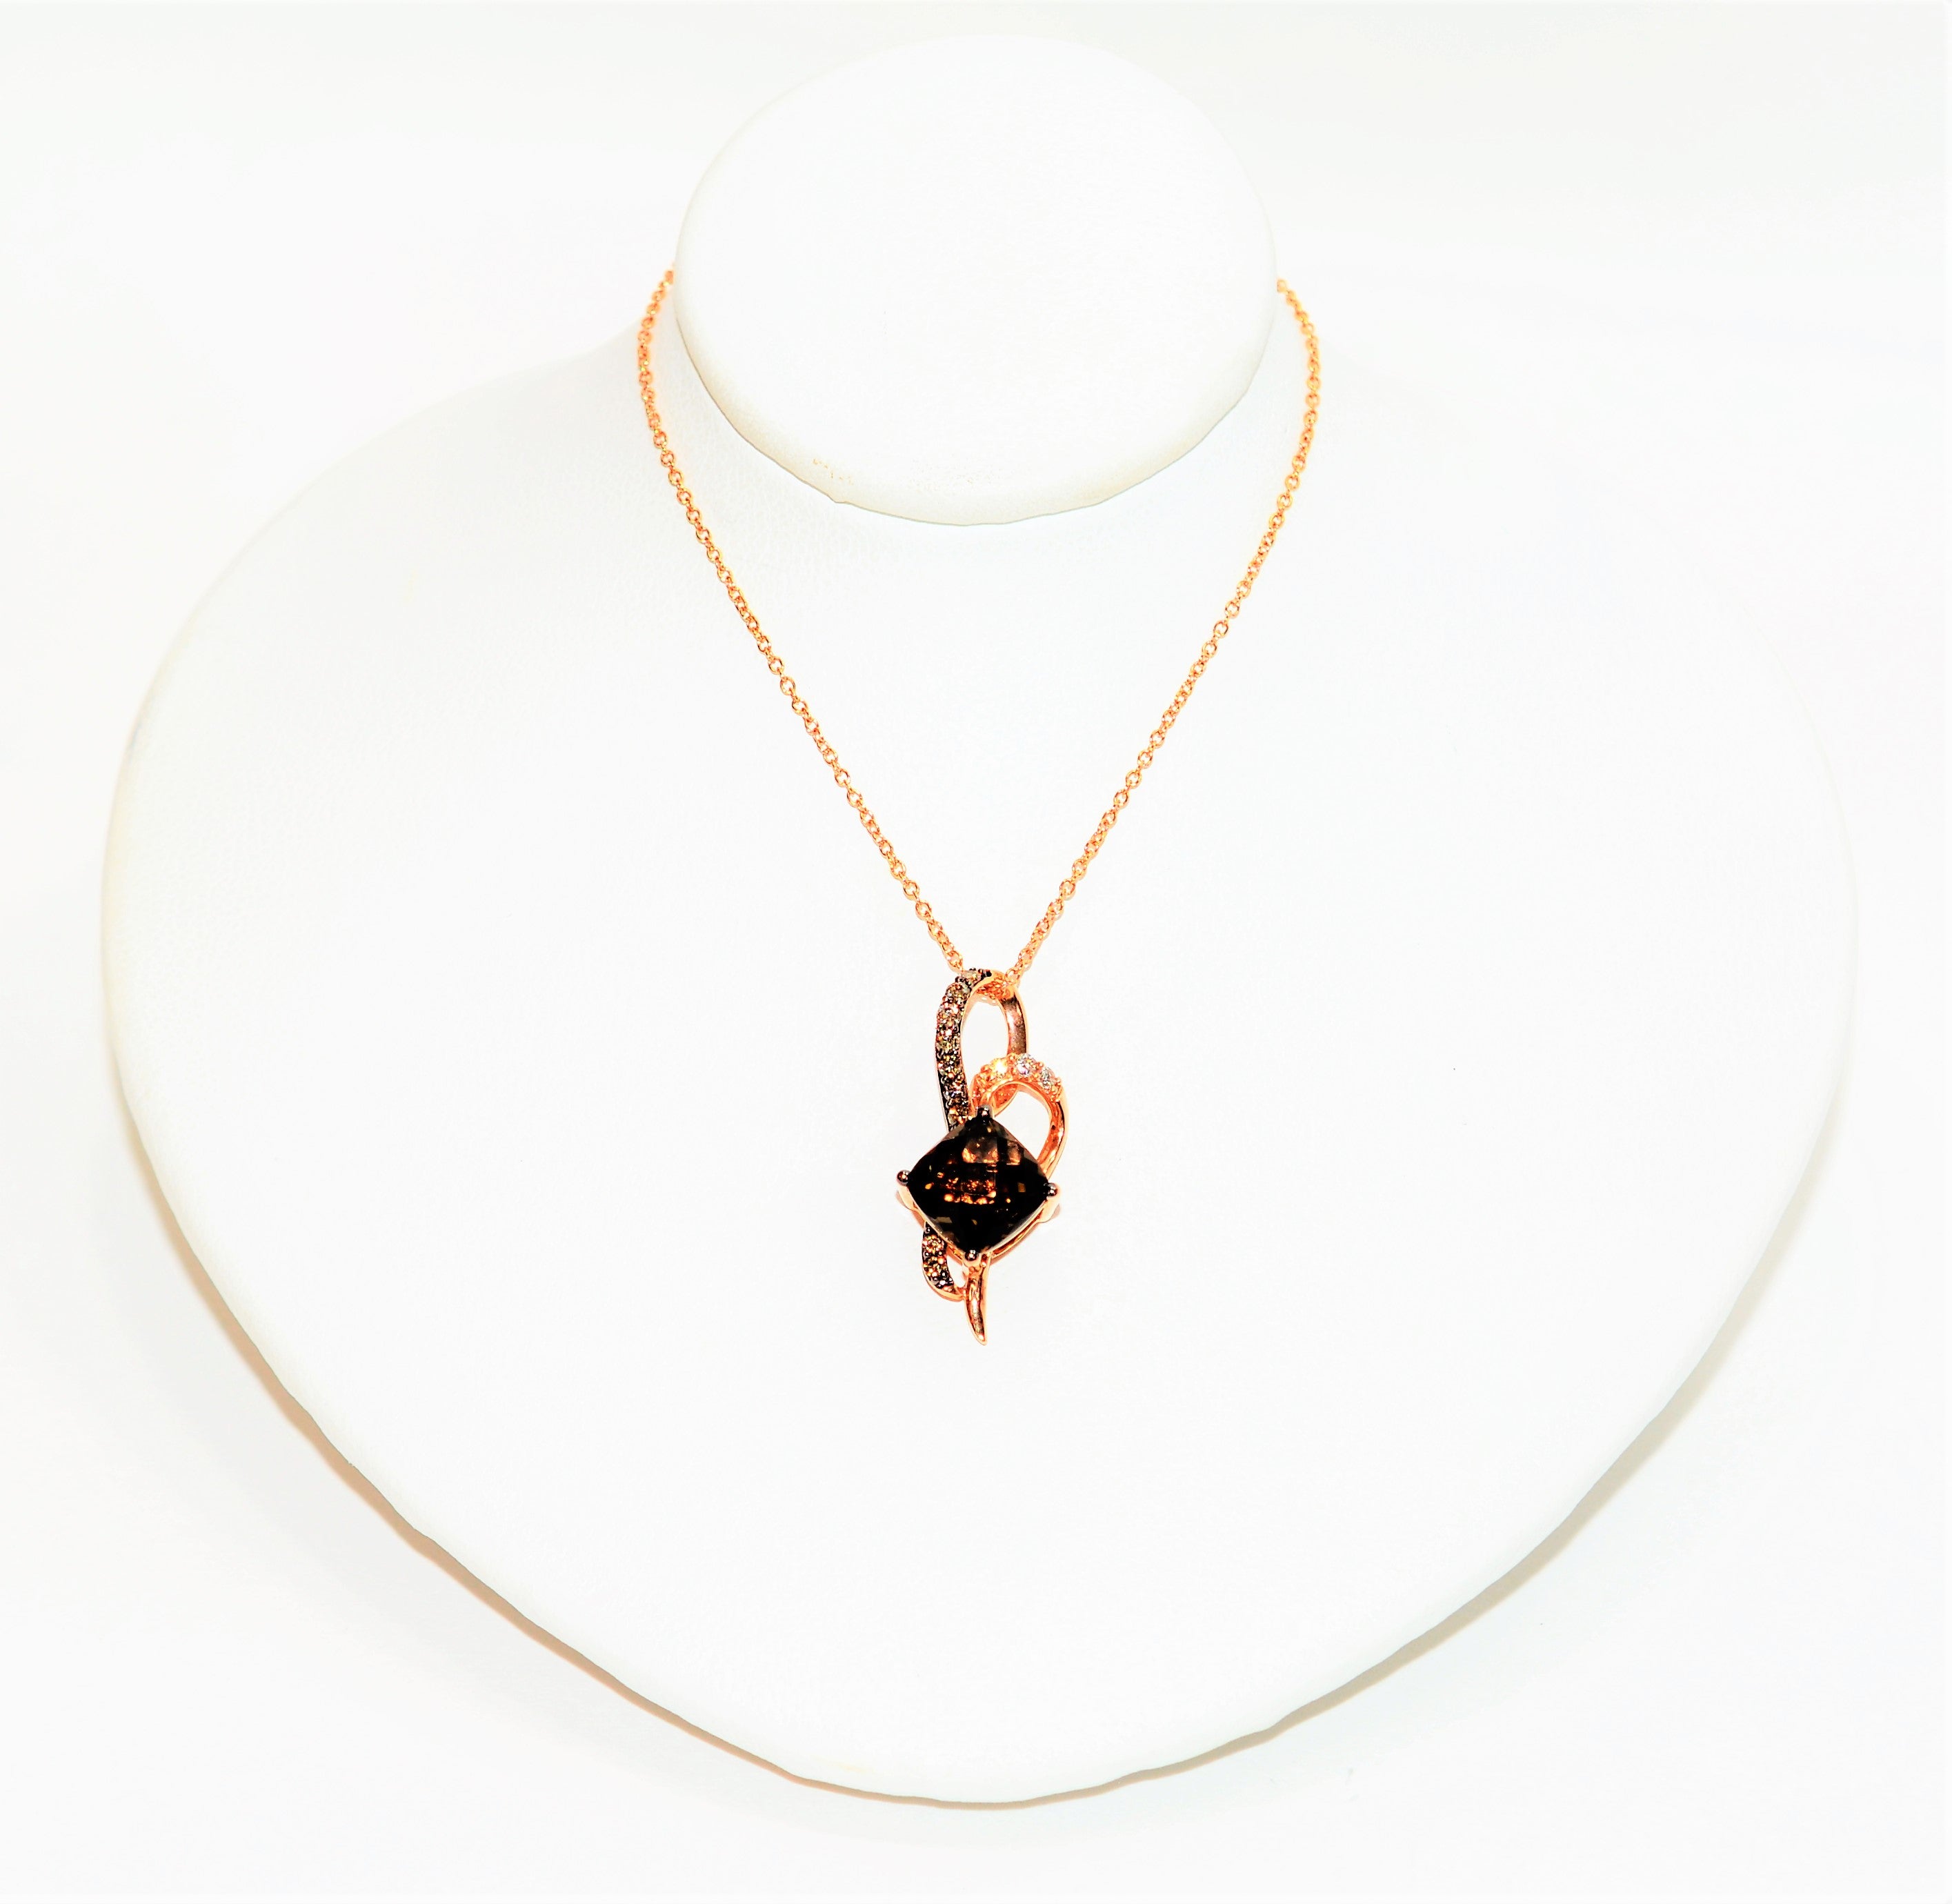 LeVian Natural Smoky Quartz & Diamond Pendant Necklace 14K Solid Rose Gold 2.45tcw LeVian Necklace Birthstone Necklace Designer Necklace